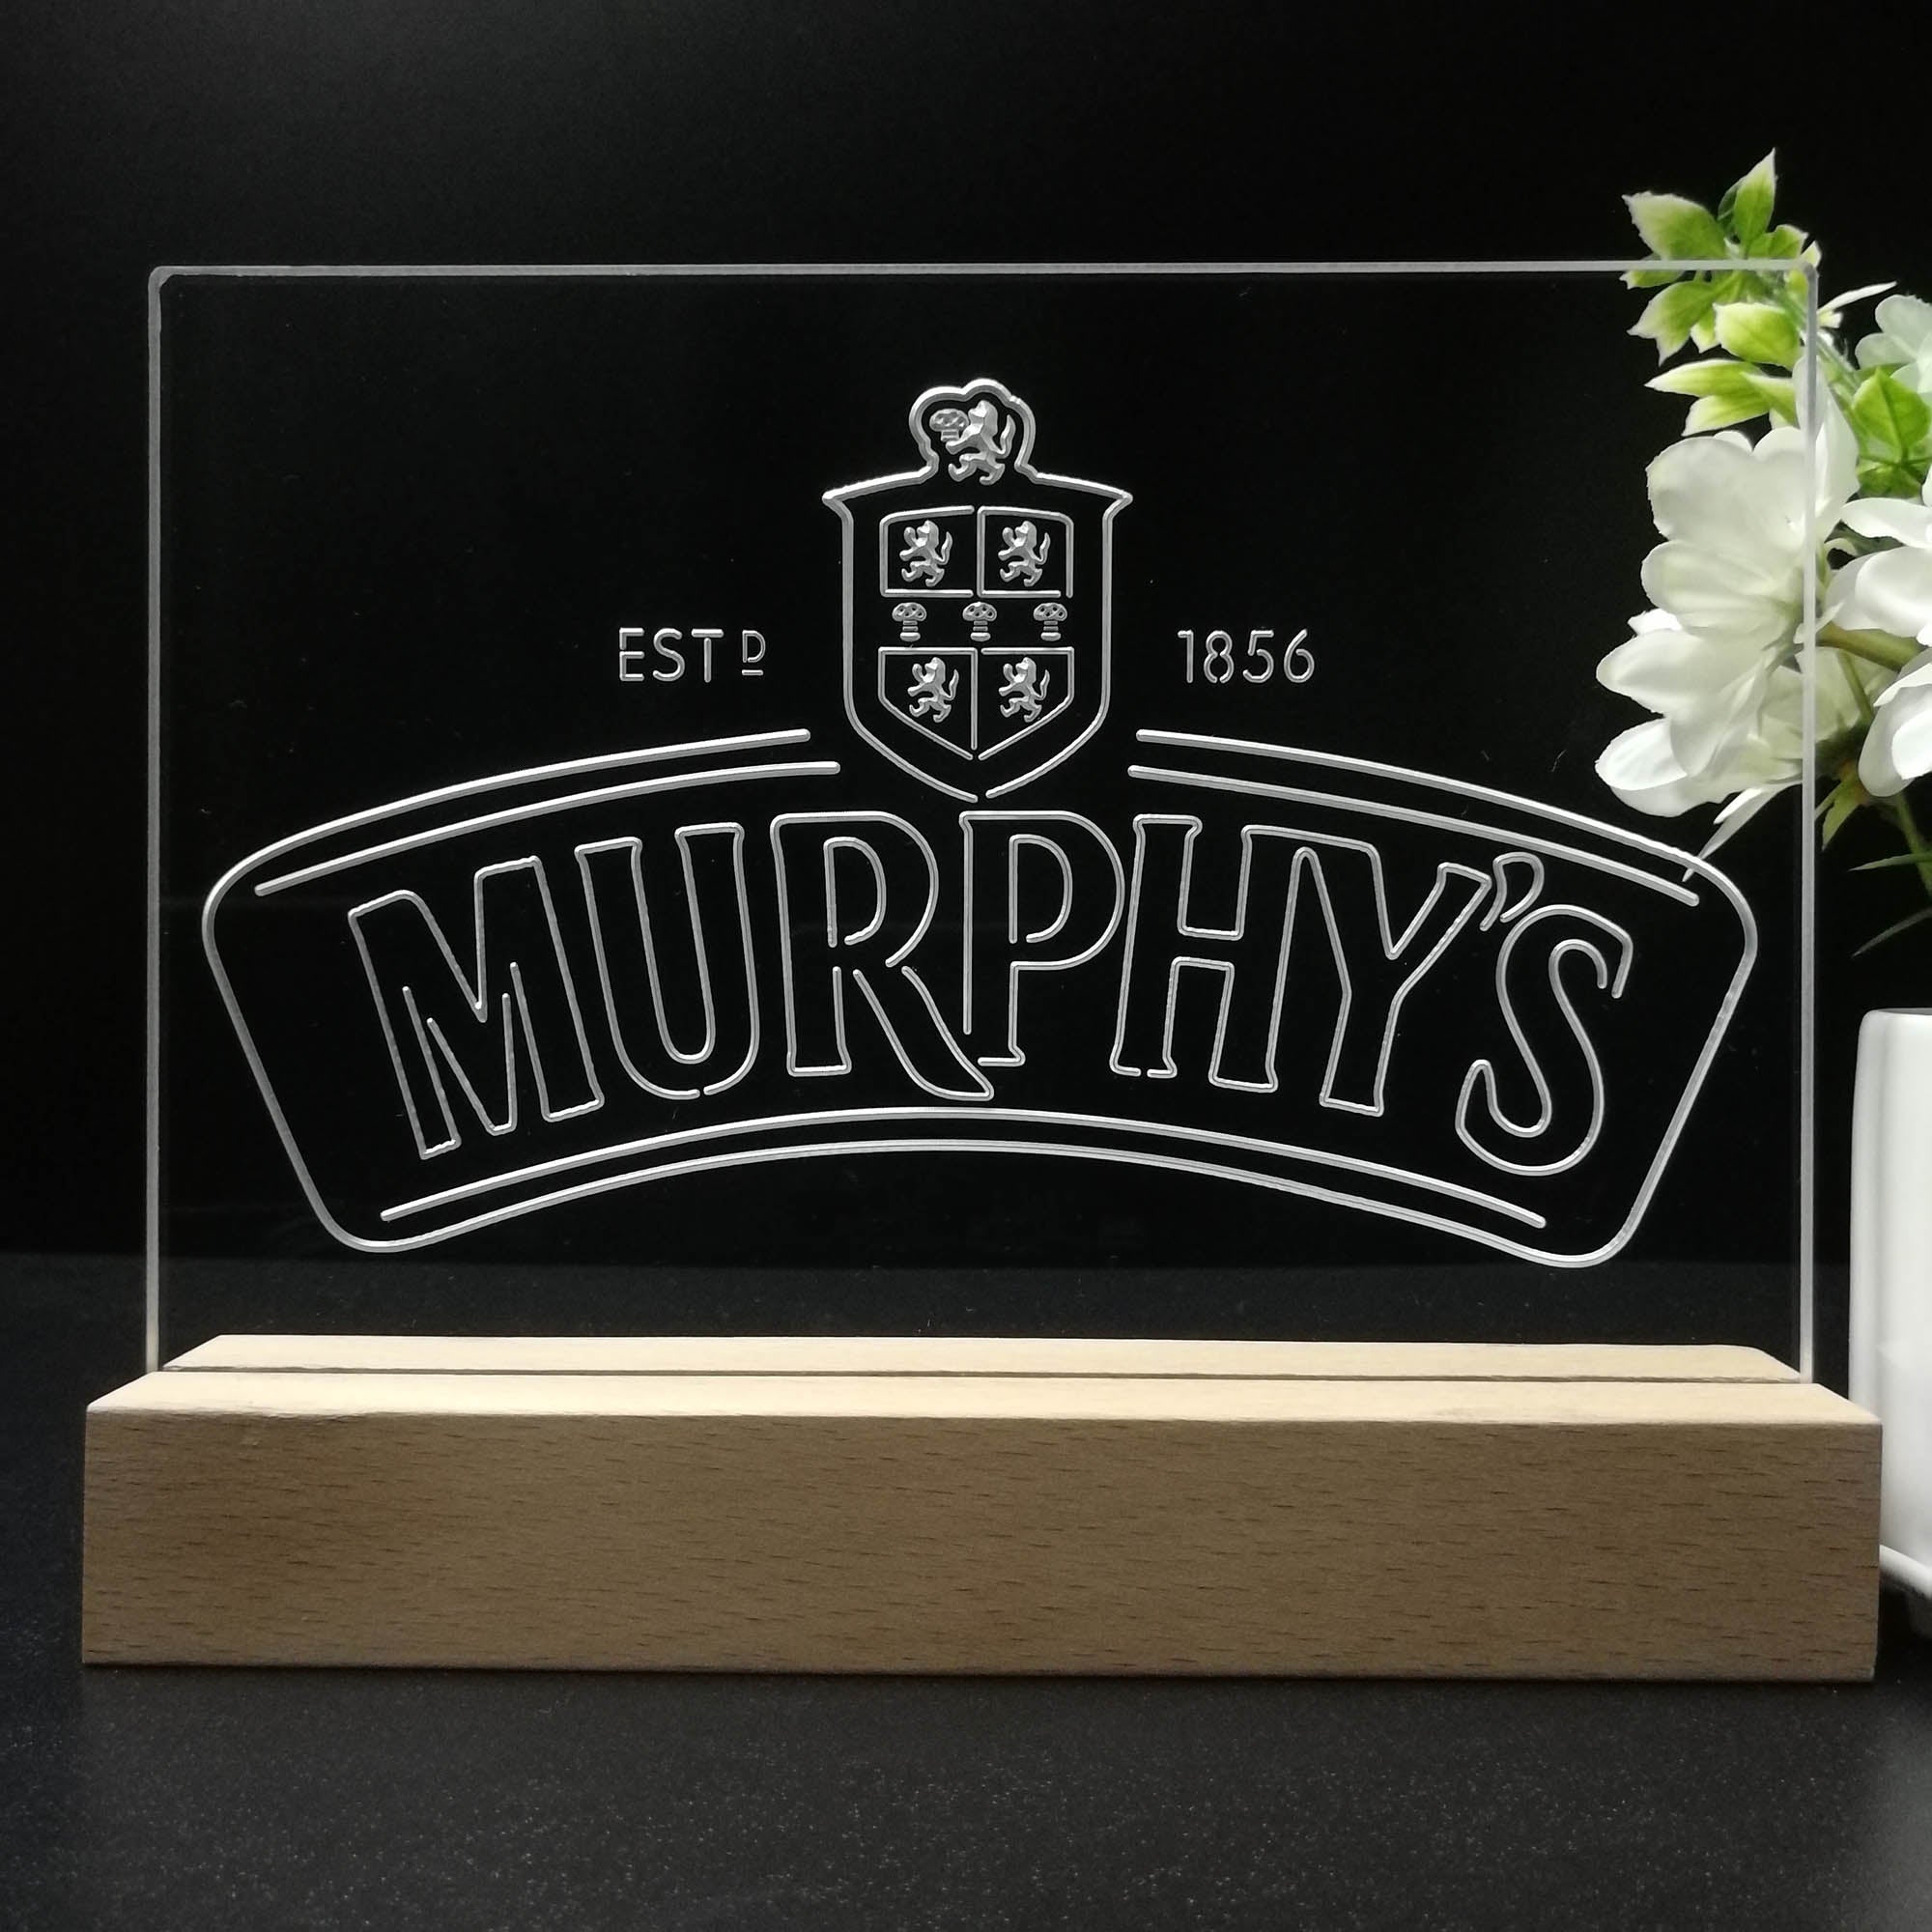 Murphy's Beer Est 1856 Neon Sign Pub Bar Decor Lamp